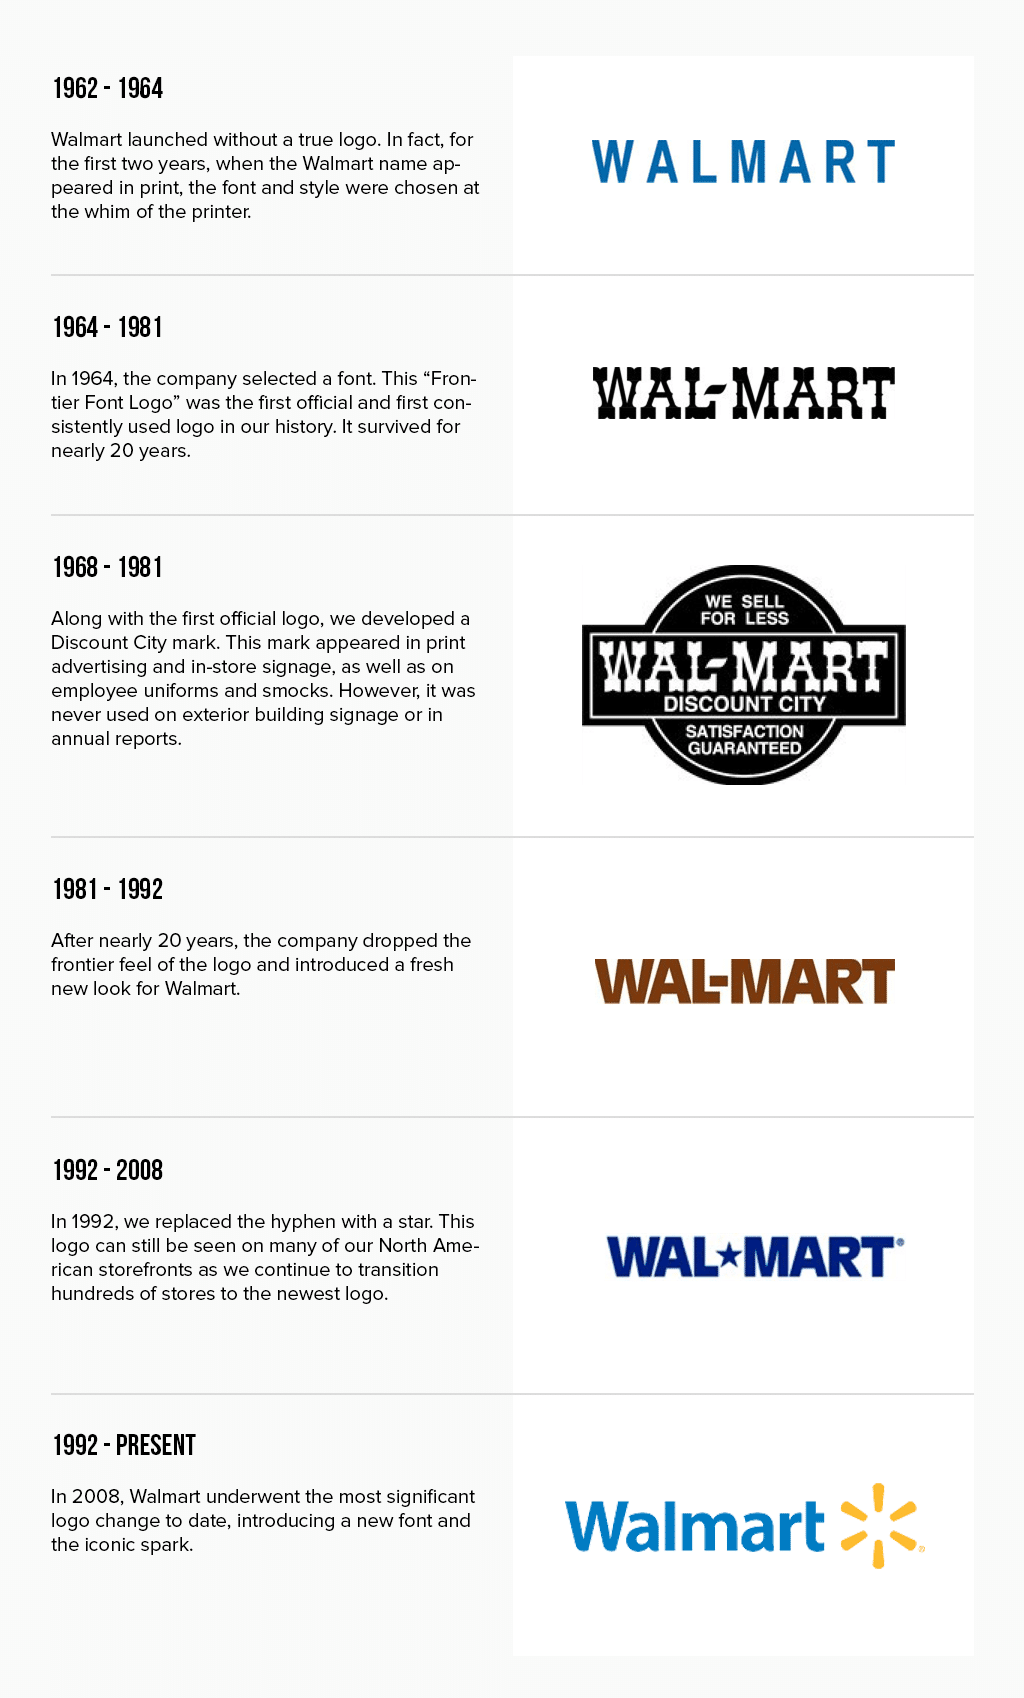 Walmart logosu evrimi